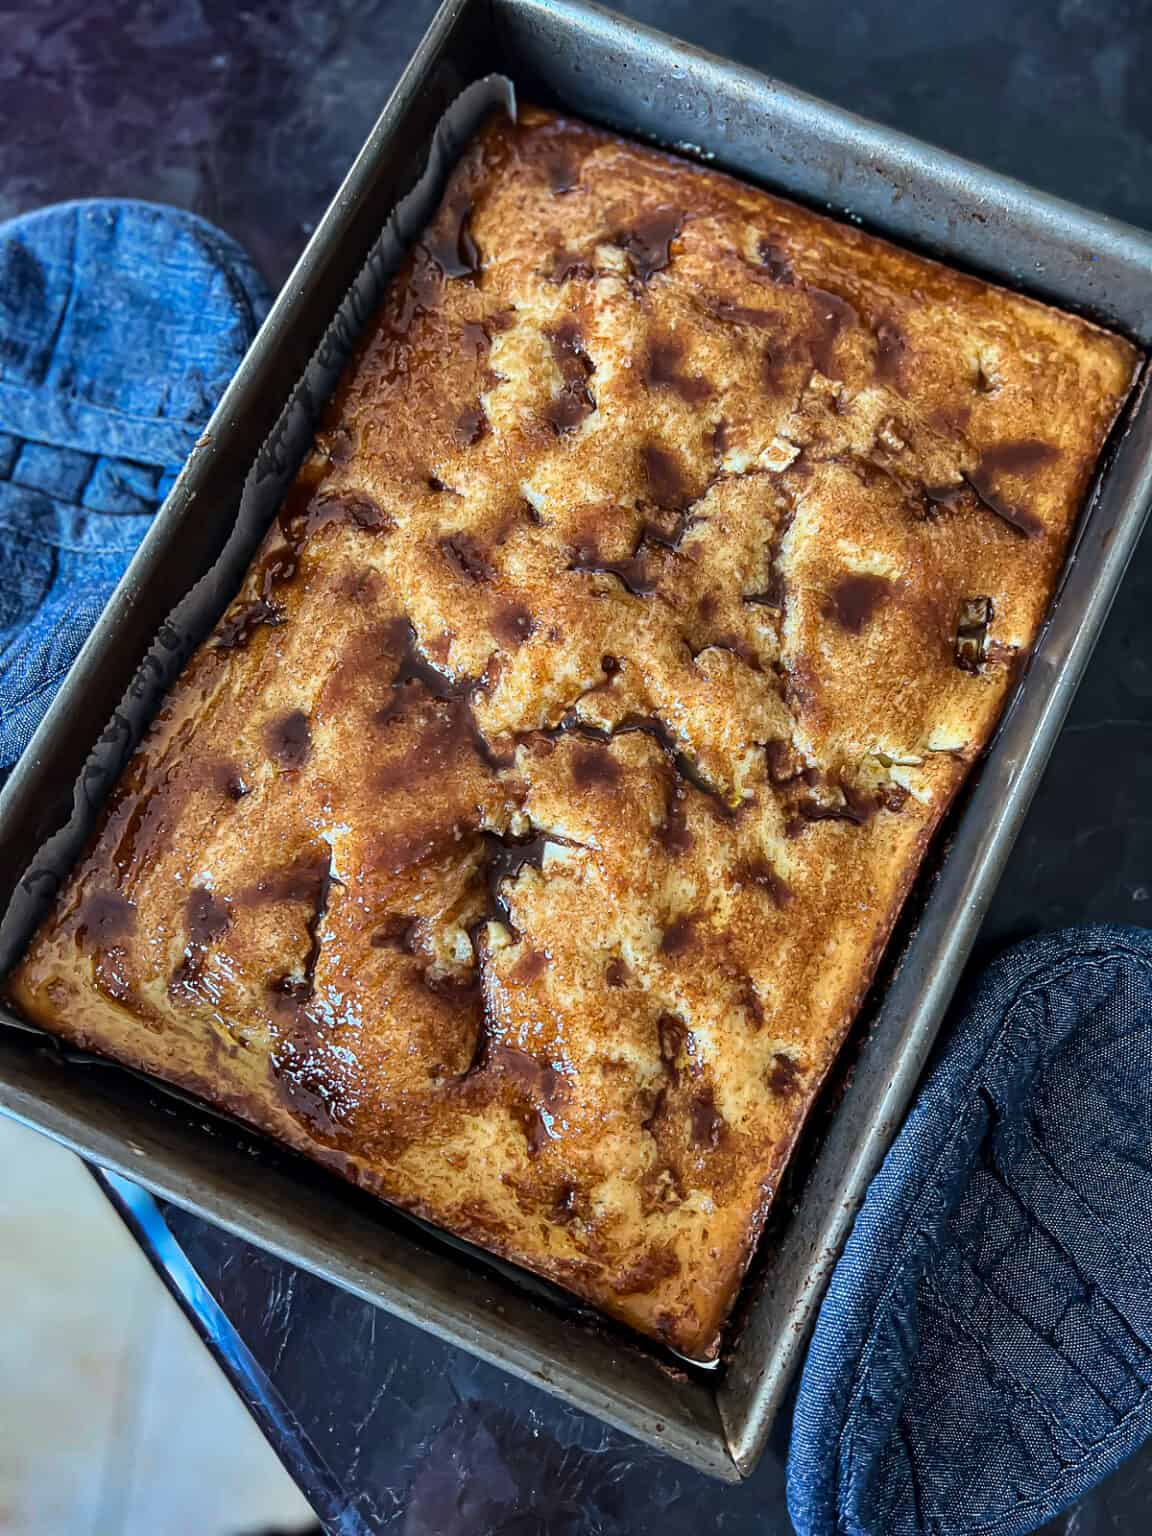 Easy Dessert: Traeger Smoked Cake With Pineapple - Sip Bite Go